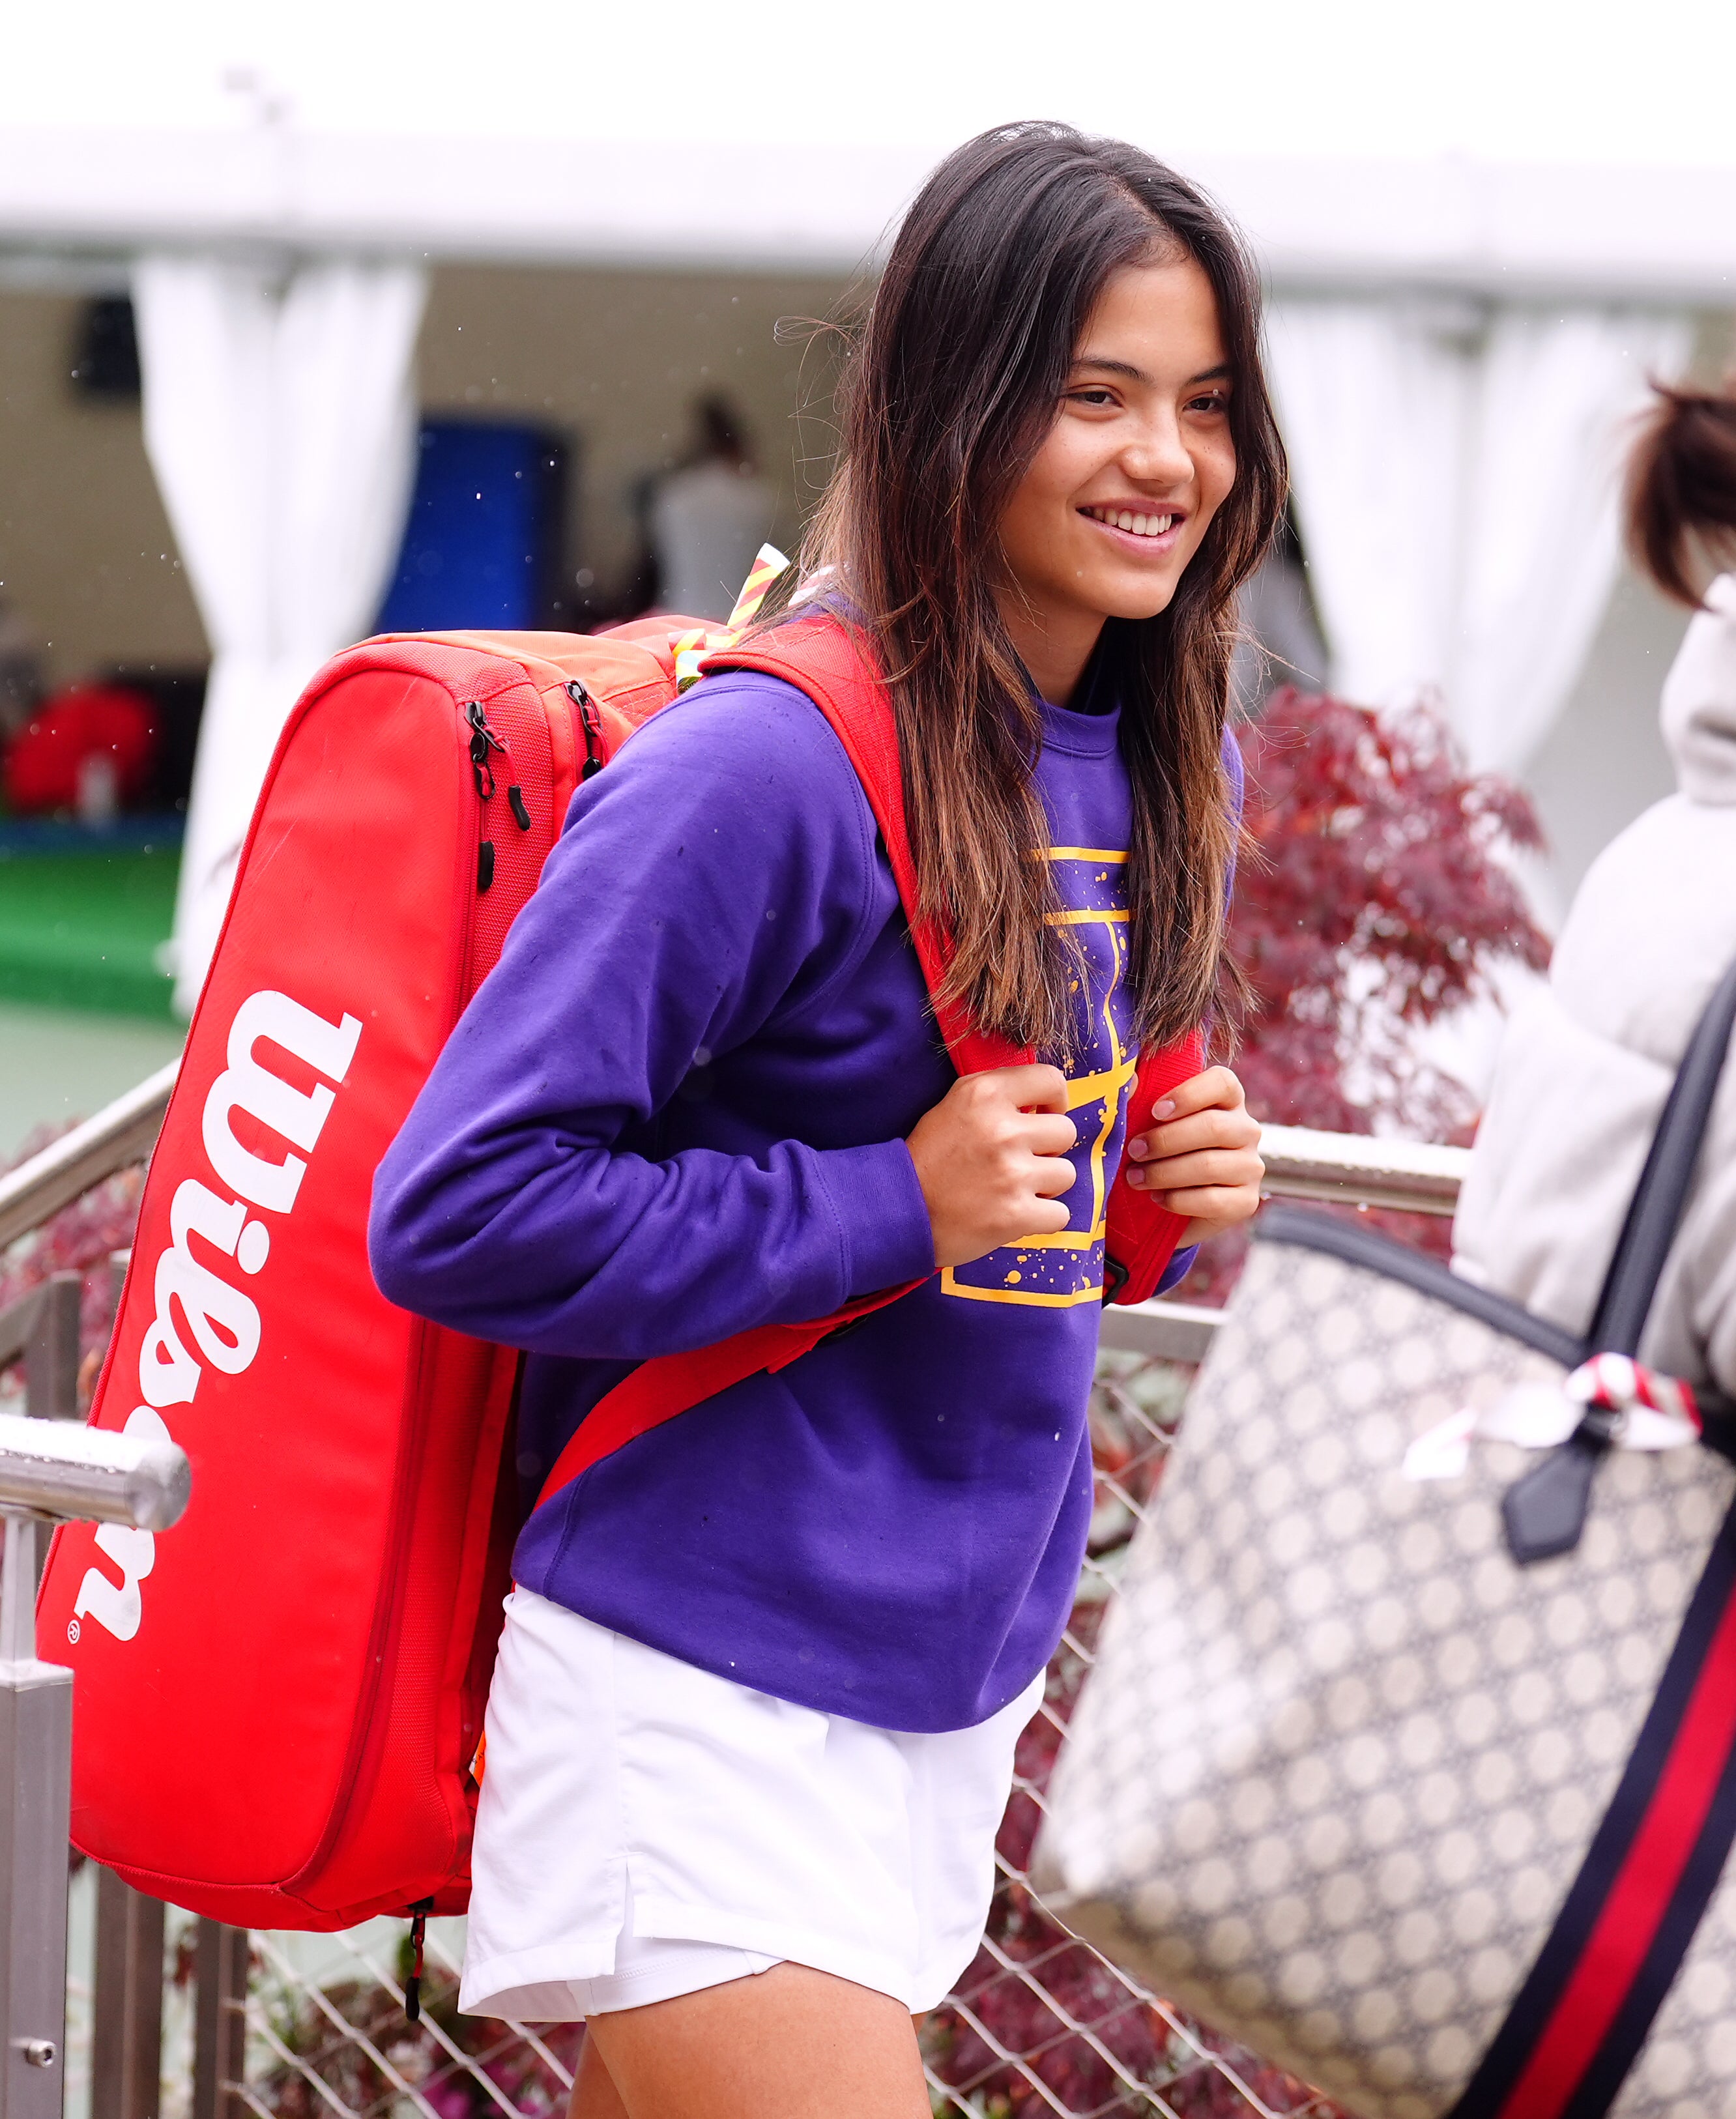 Emma Raducanu arrives at Wimbledon for training on Saturday (Mike Egerton/PA)